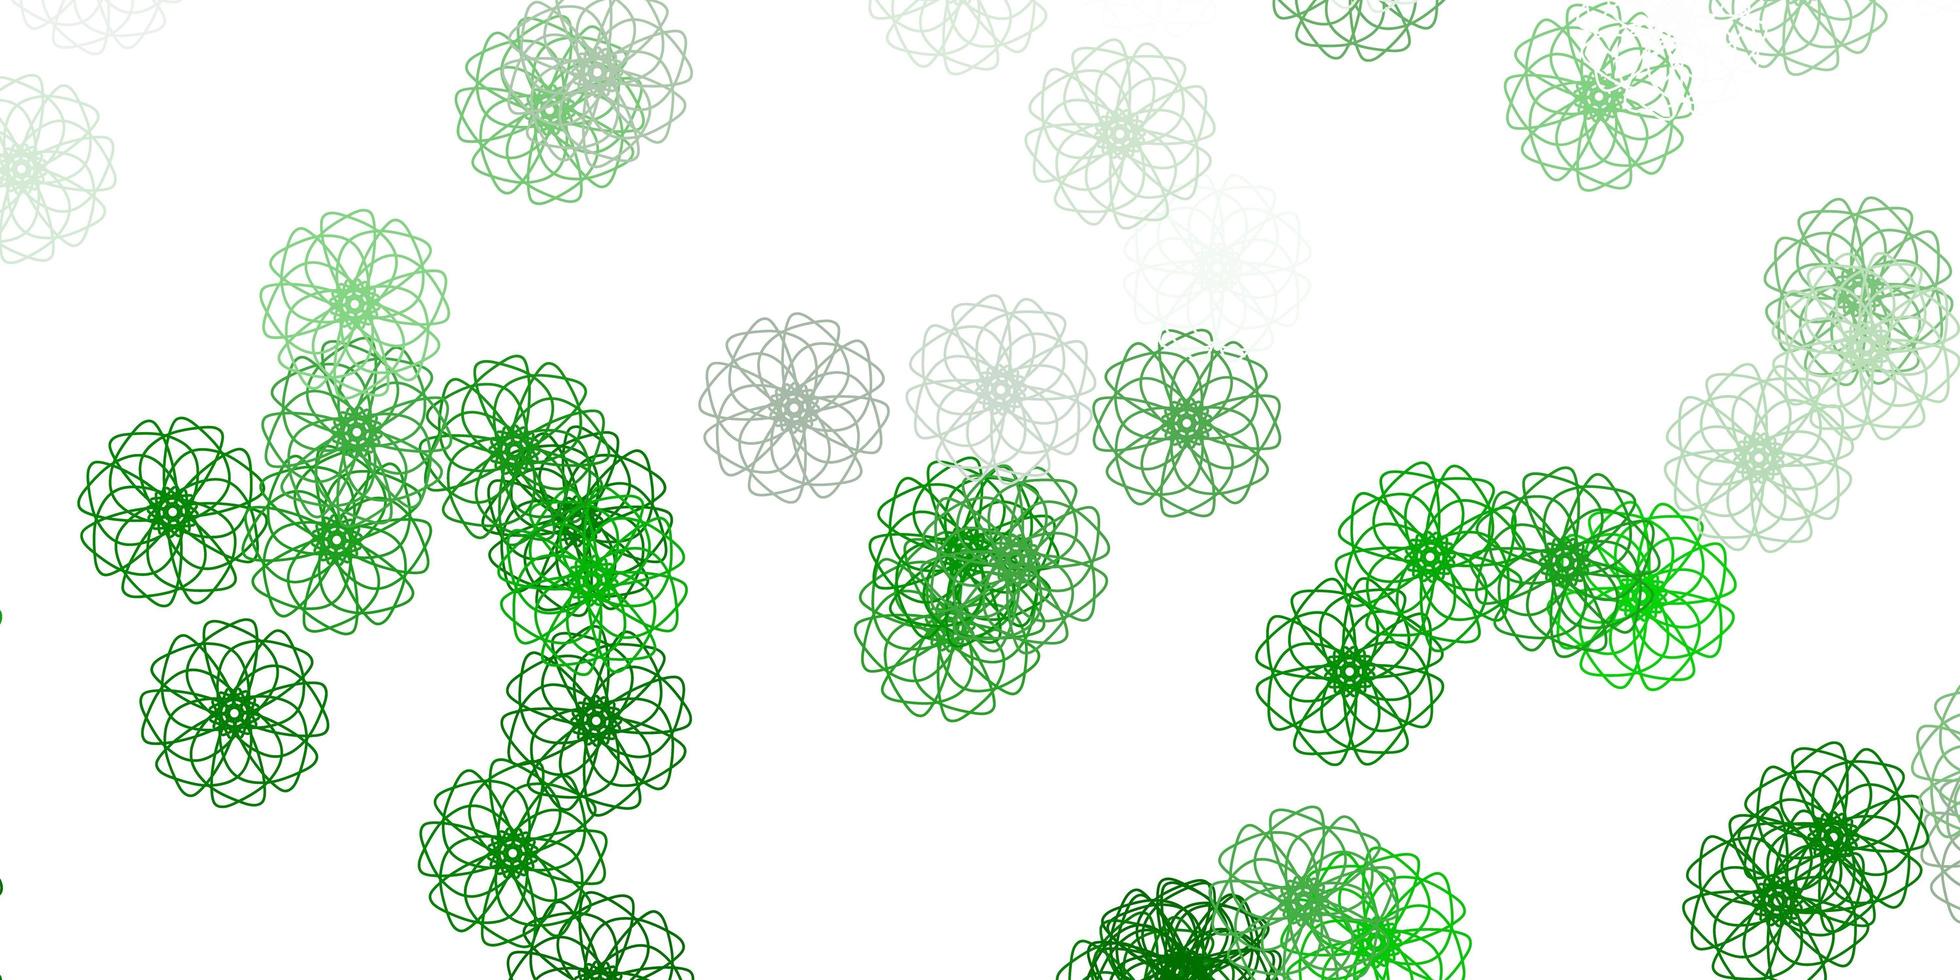 diseño natural de vector verde claro con flores.